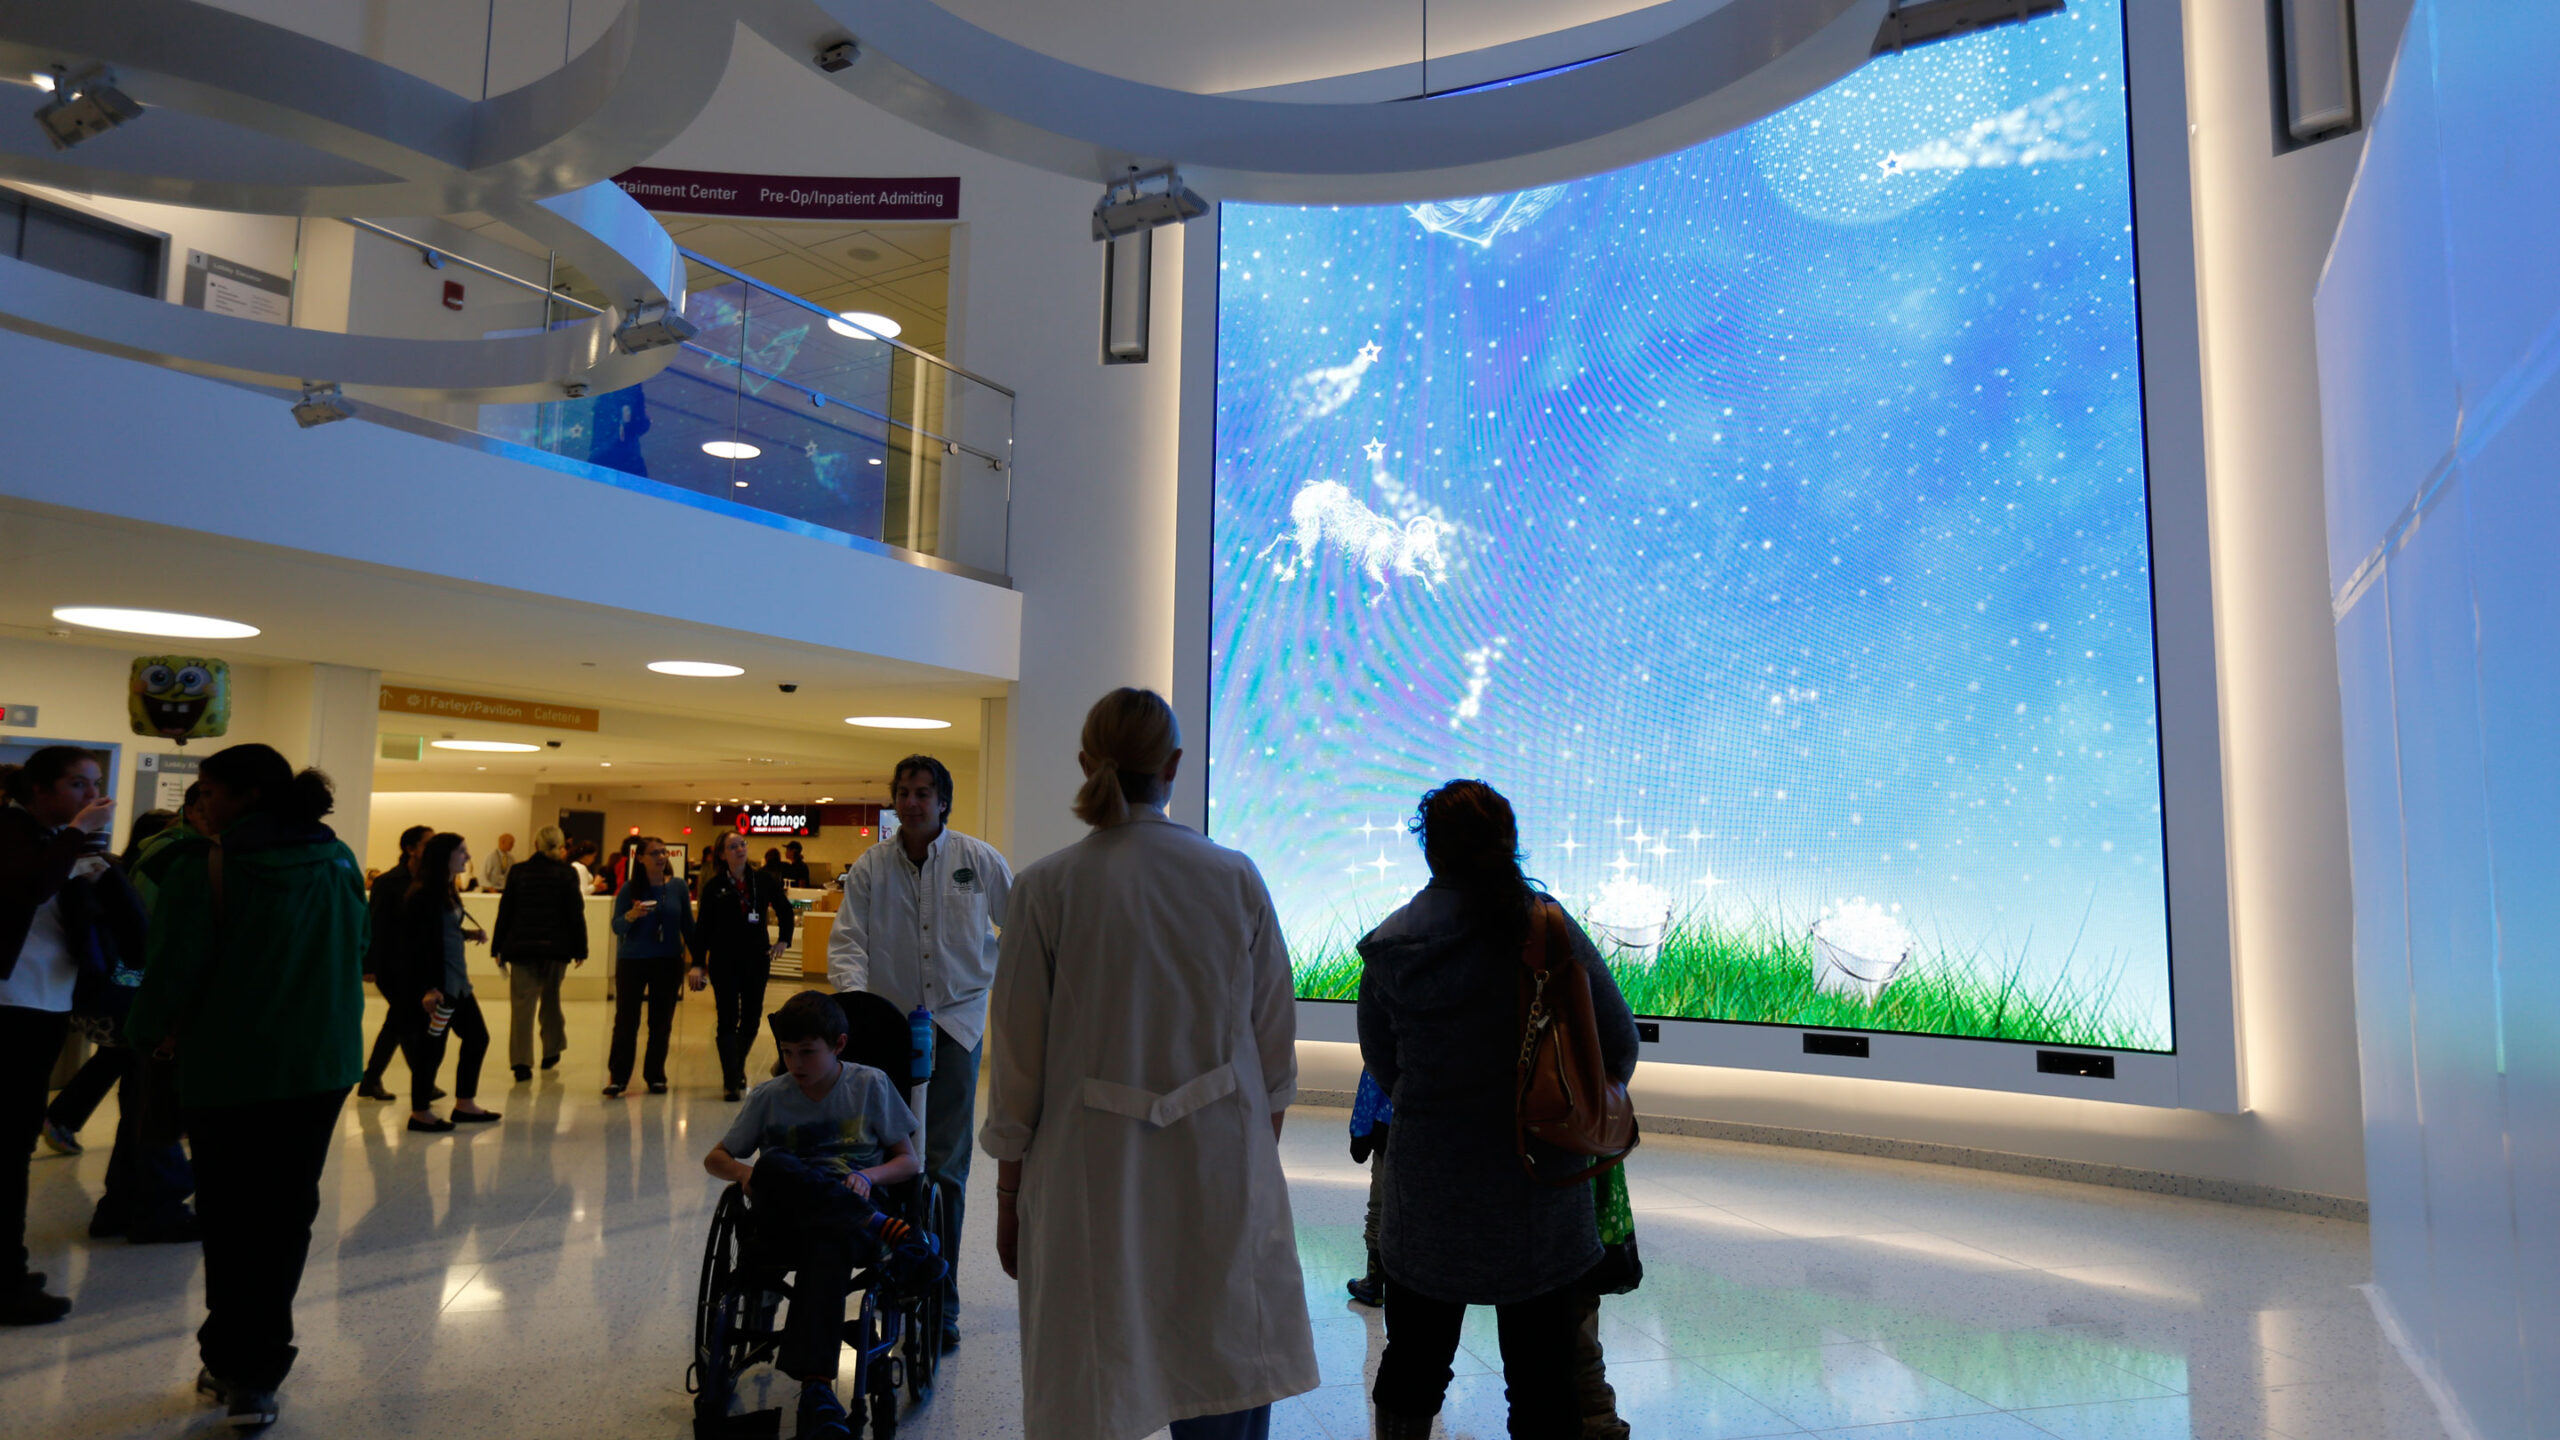 Interactive Media Wall: Boston Children’s Hospital